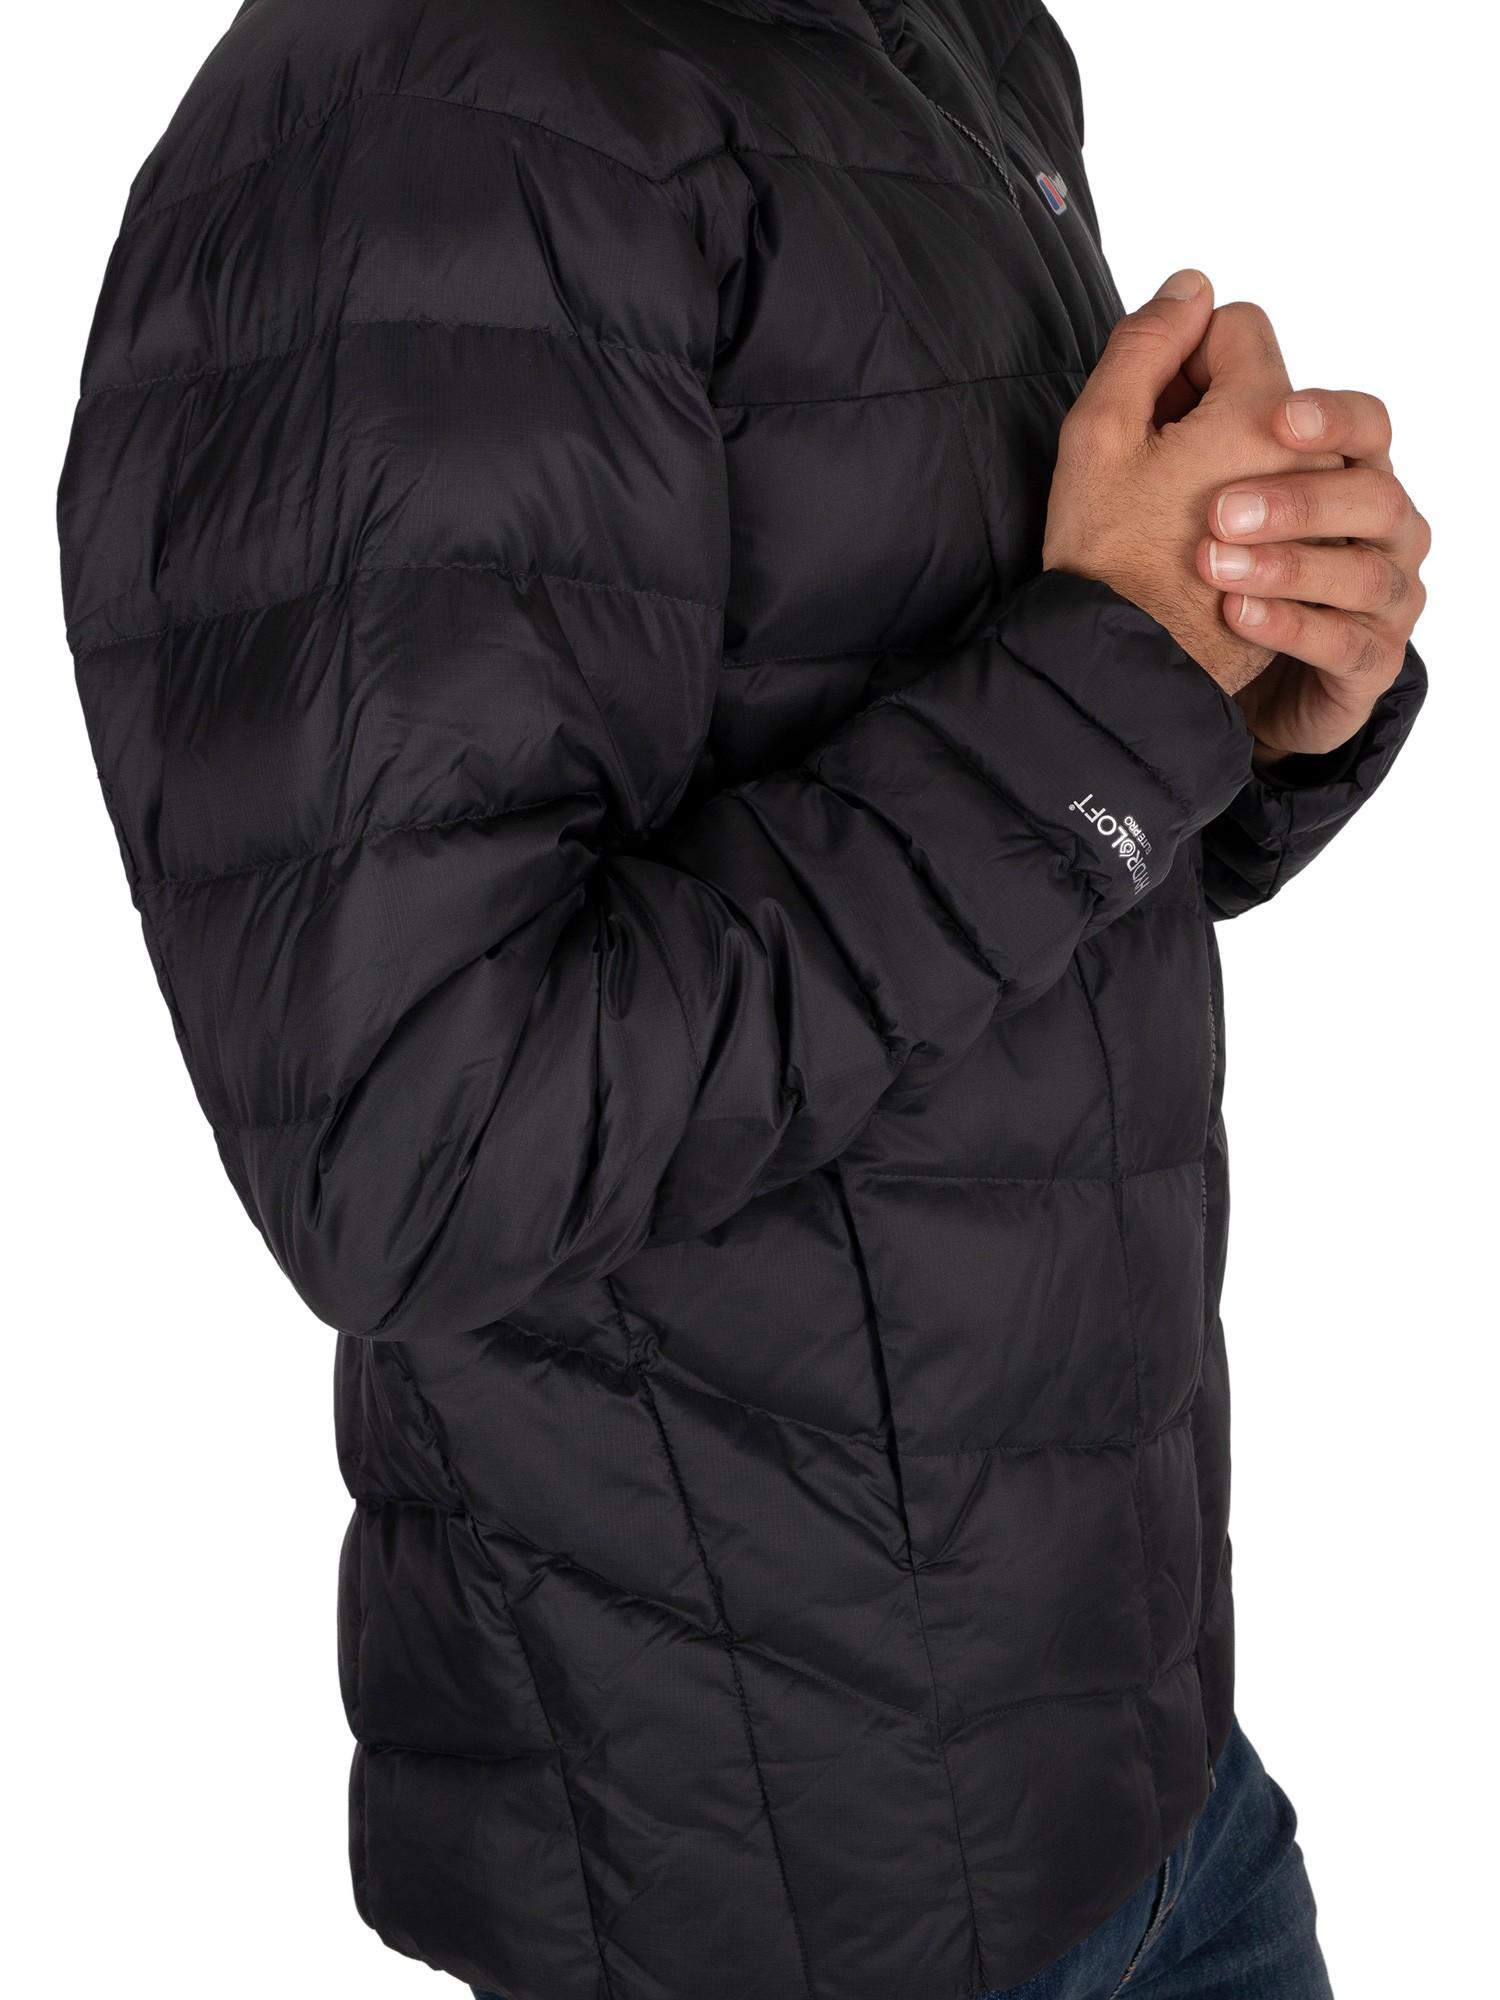 Berghaus Nunat Mountain Reflect Jacket in Black/Black (Black) for Men - Lyst